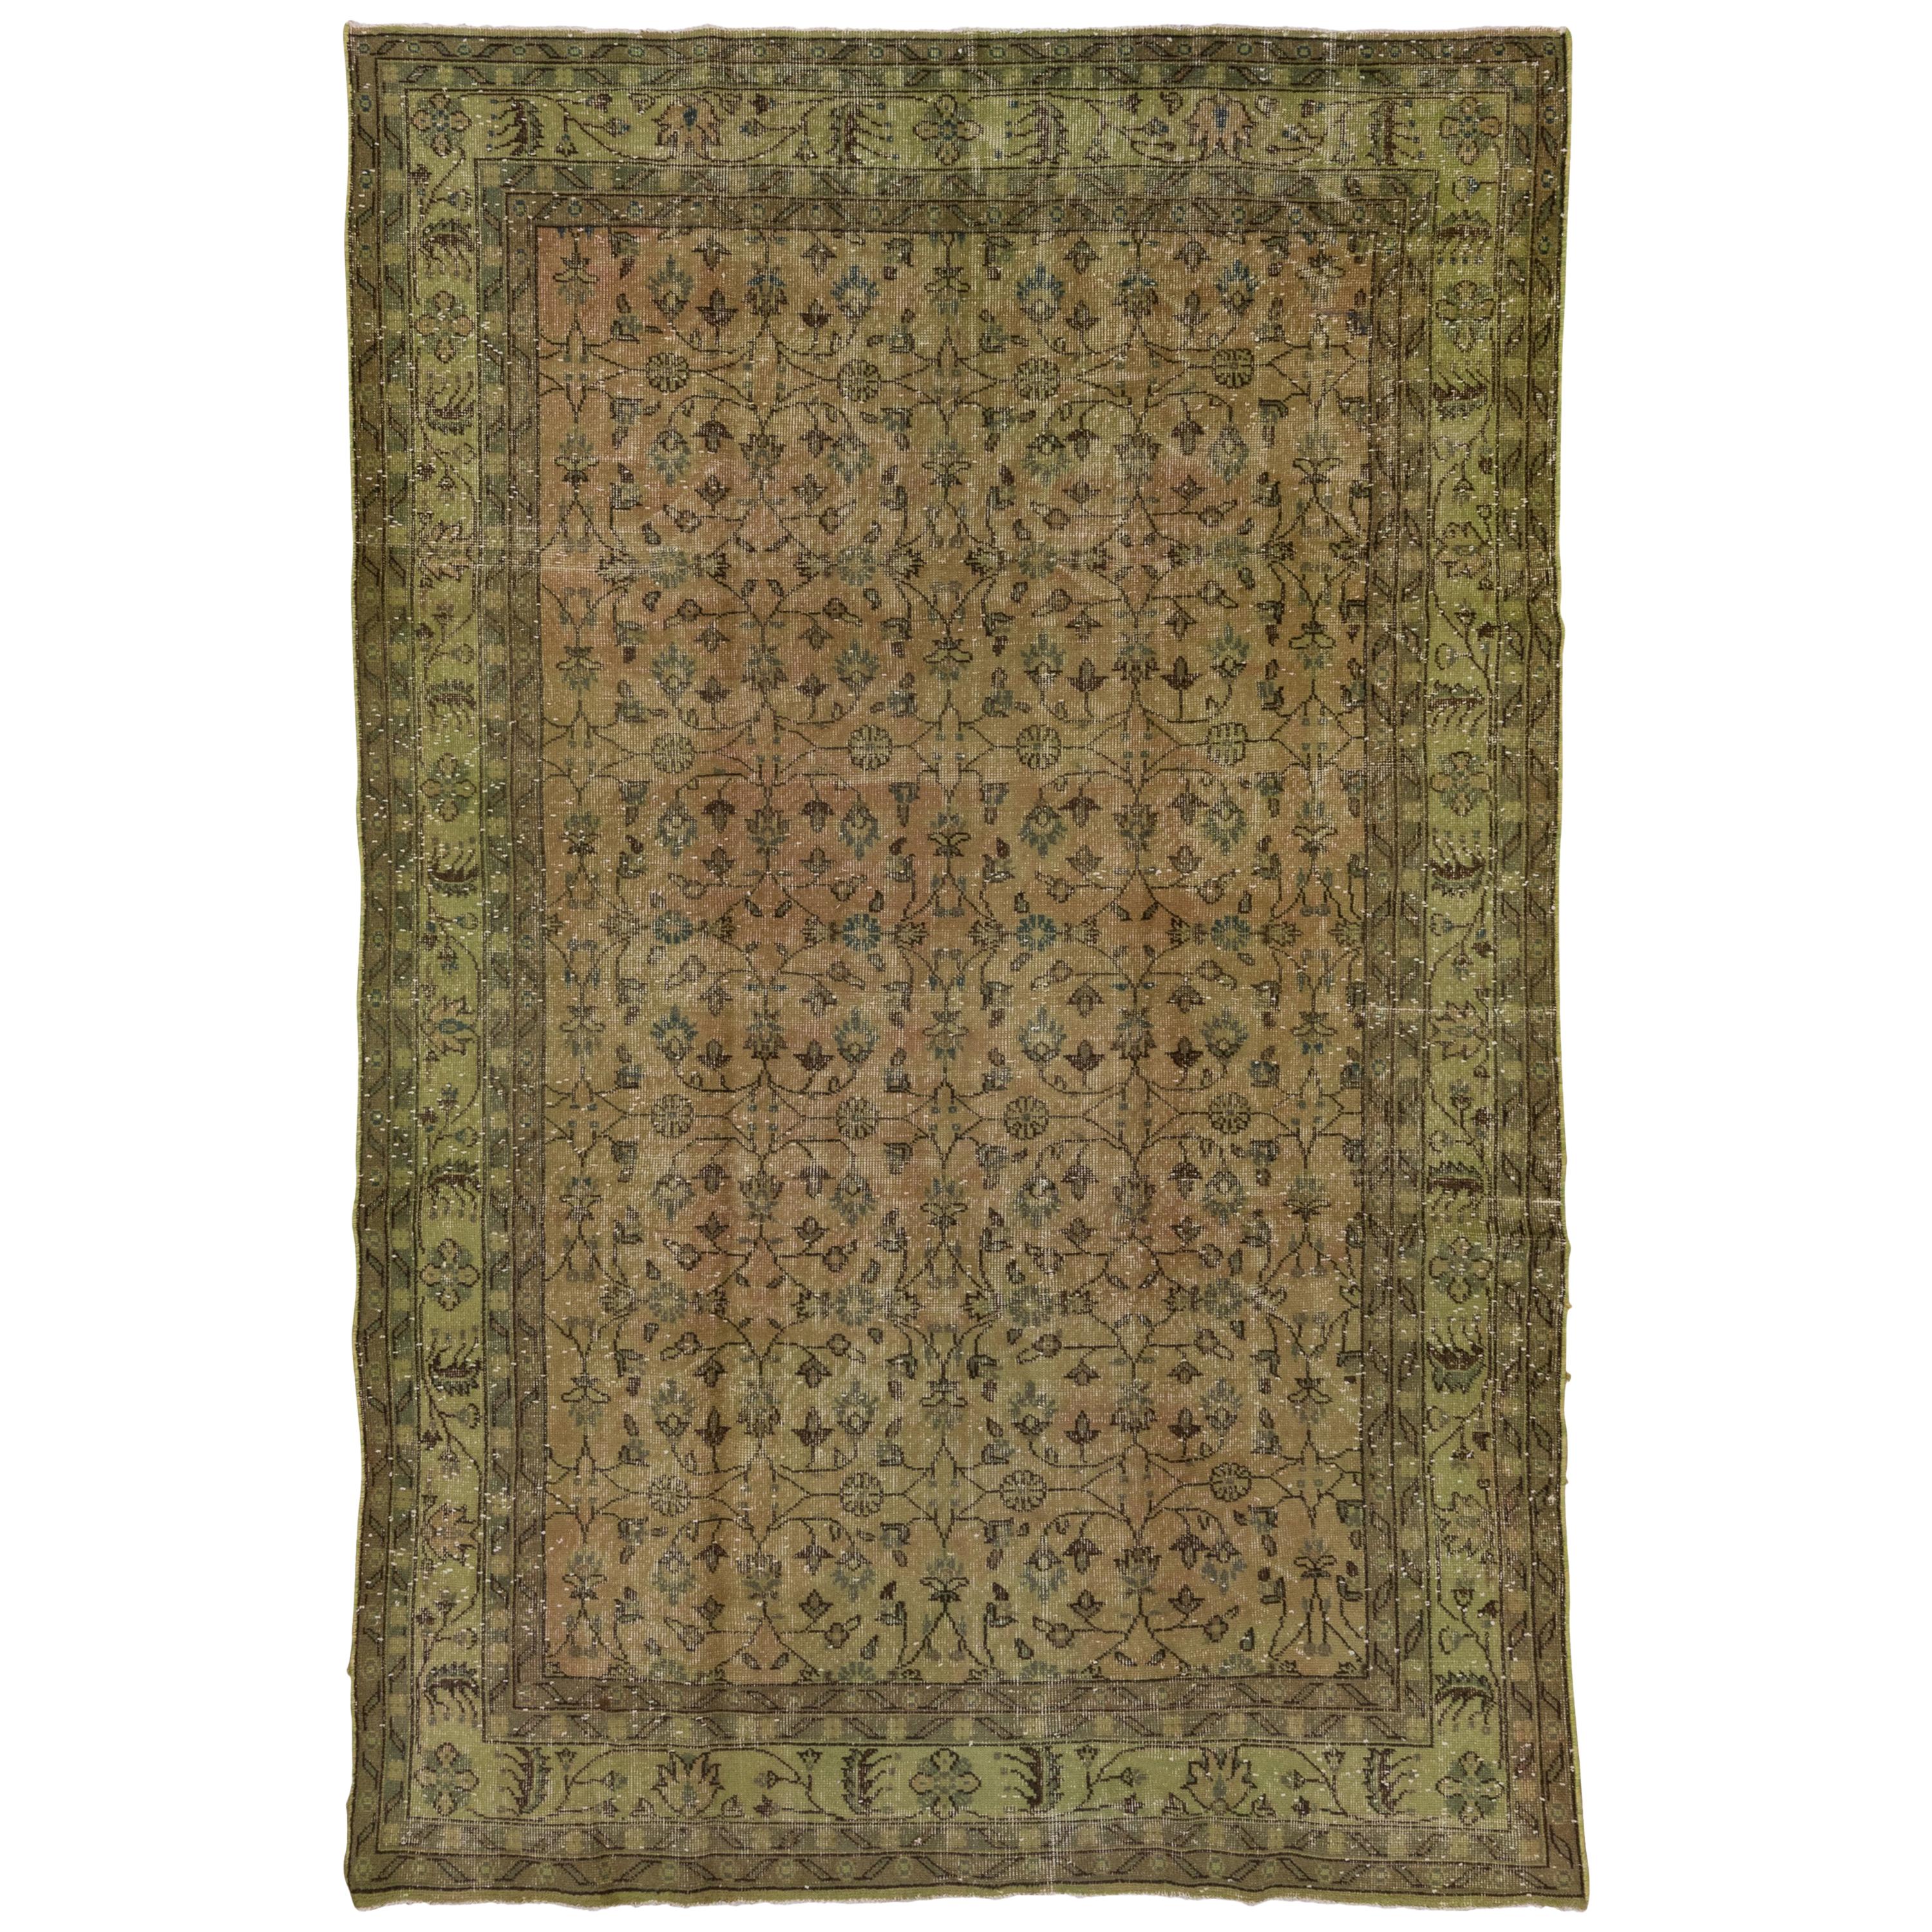 Vintage Overdyed Carpet, Green Tones